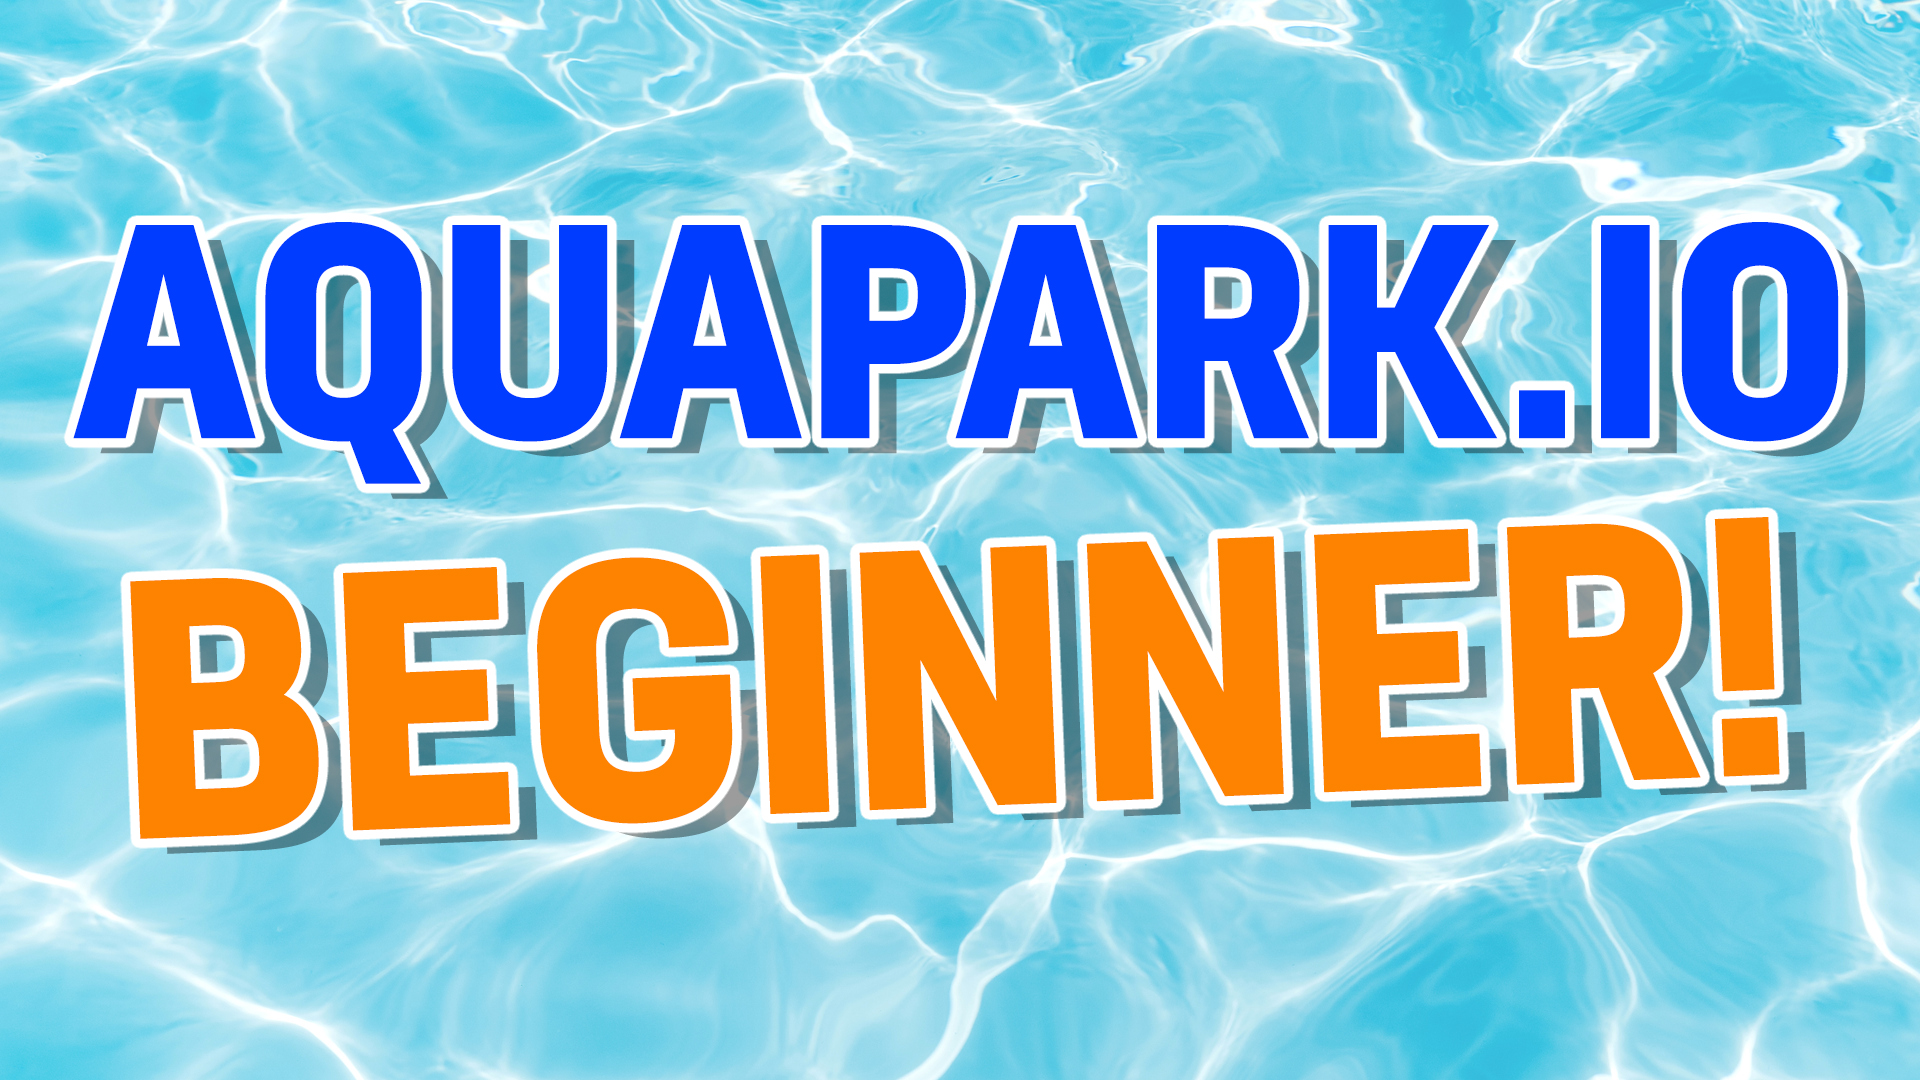 Aquapark beginner